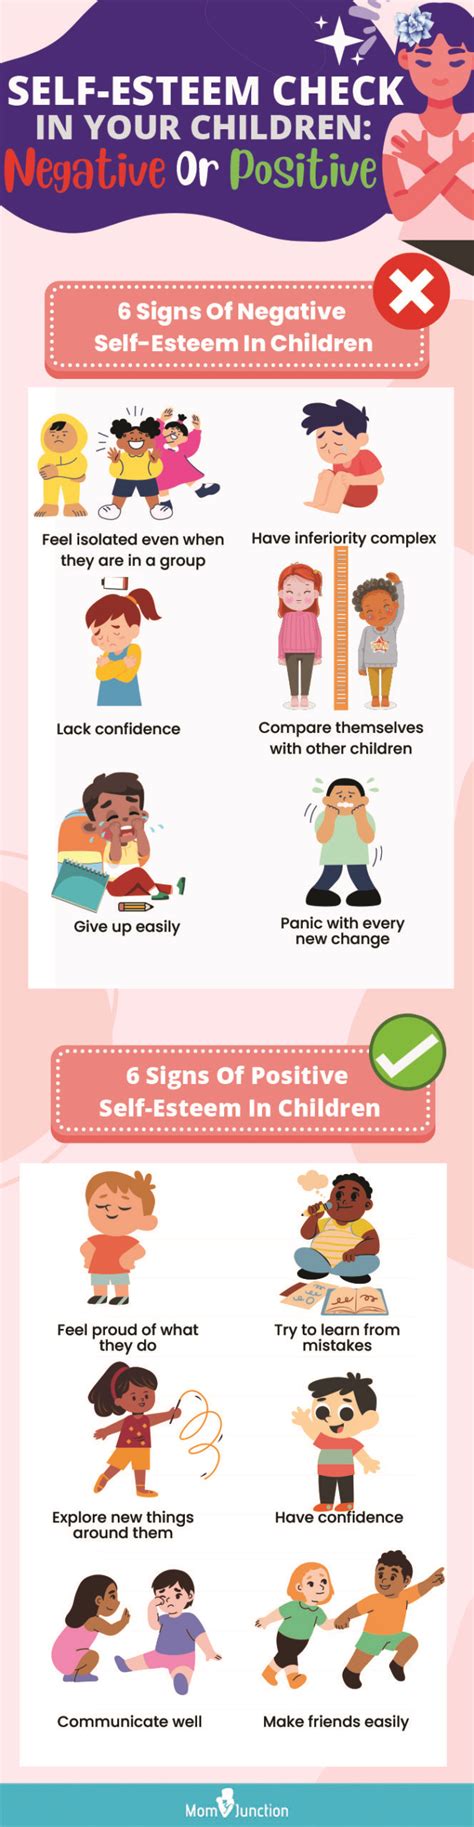 7 Tips To Build Self Esteem In Children And Activities To Do